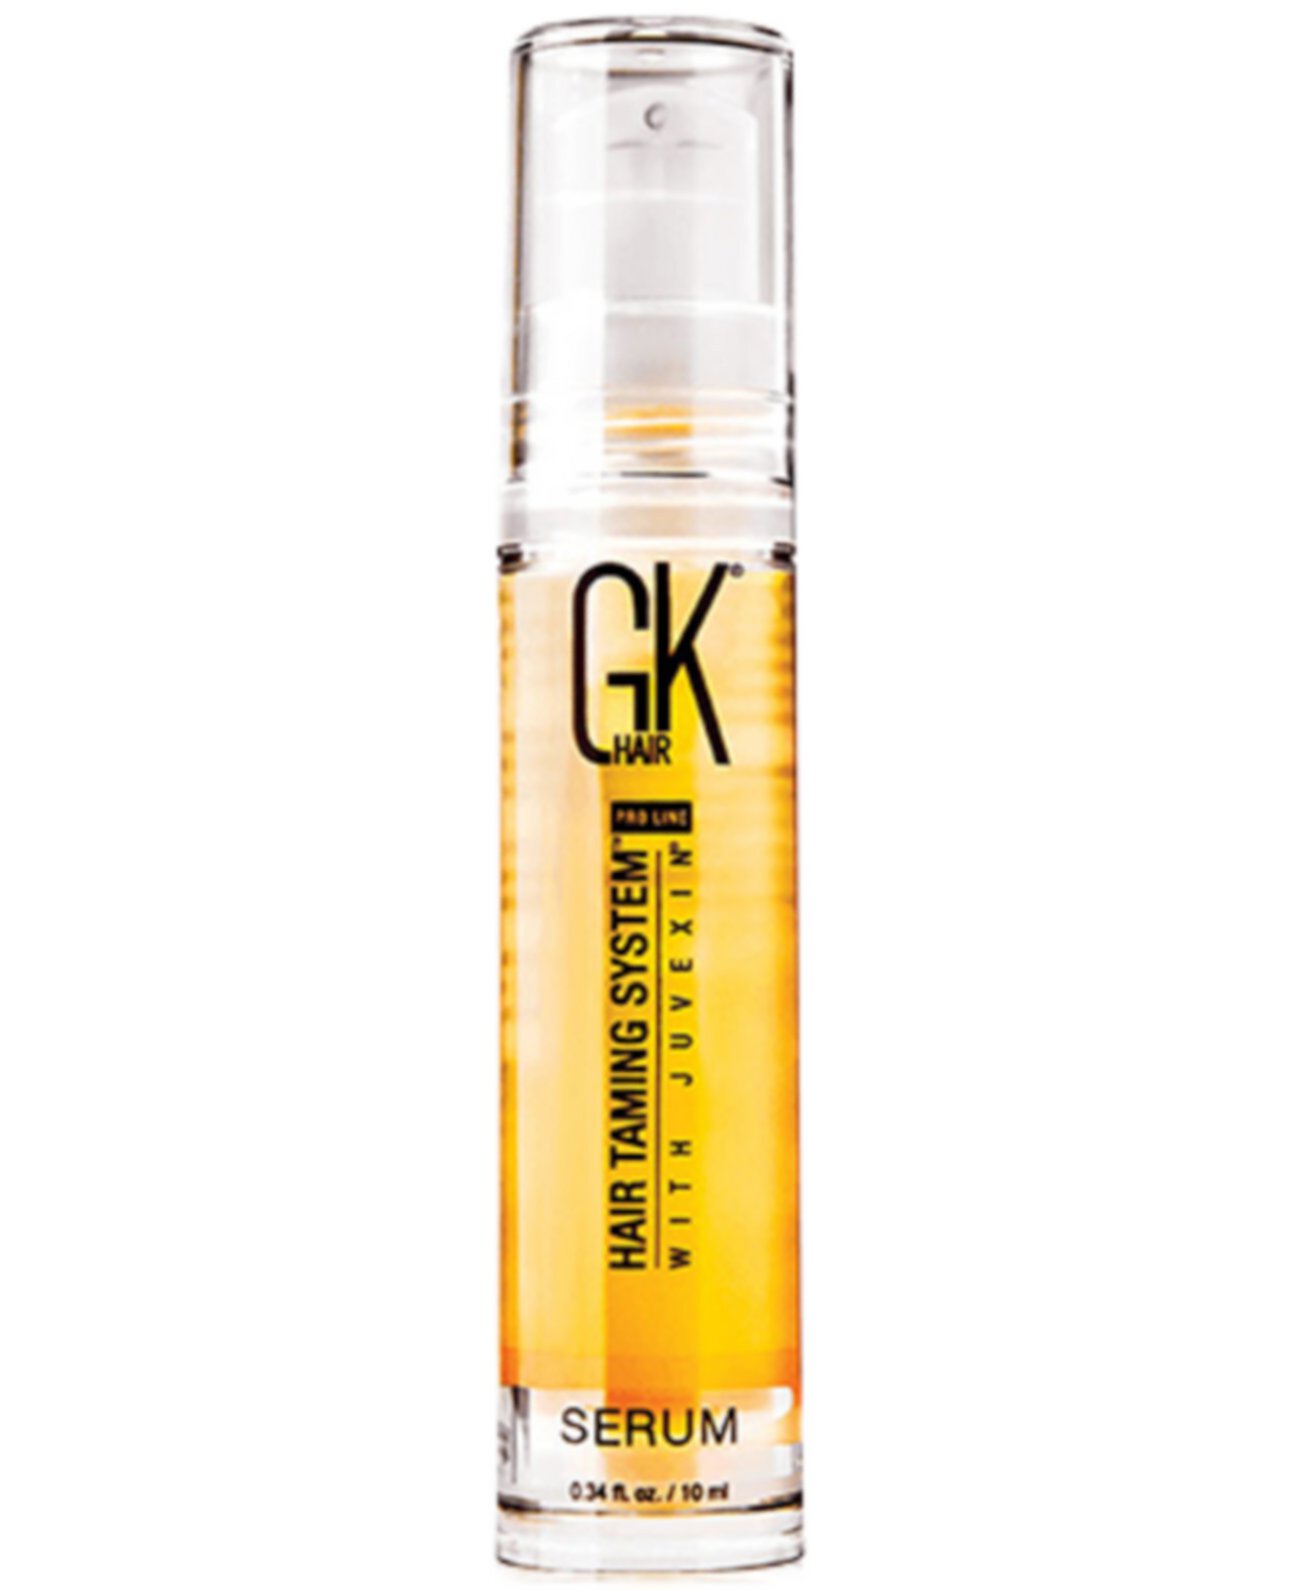 Сыворотка для волос GKHair, 0,34 унции, от PUREBEAUTY Salon & Spa Global Keratin